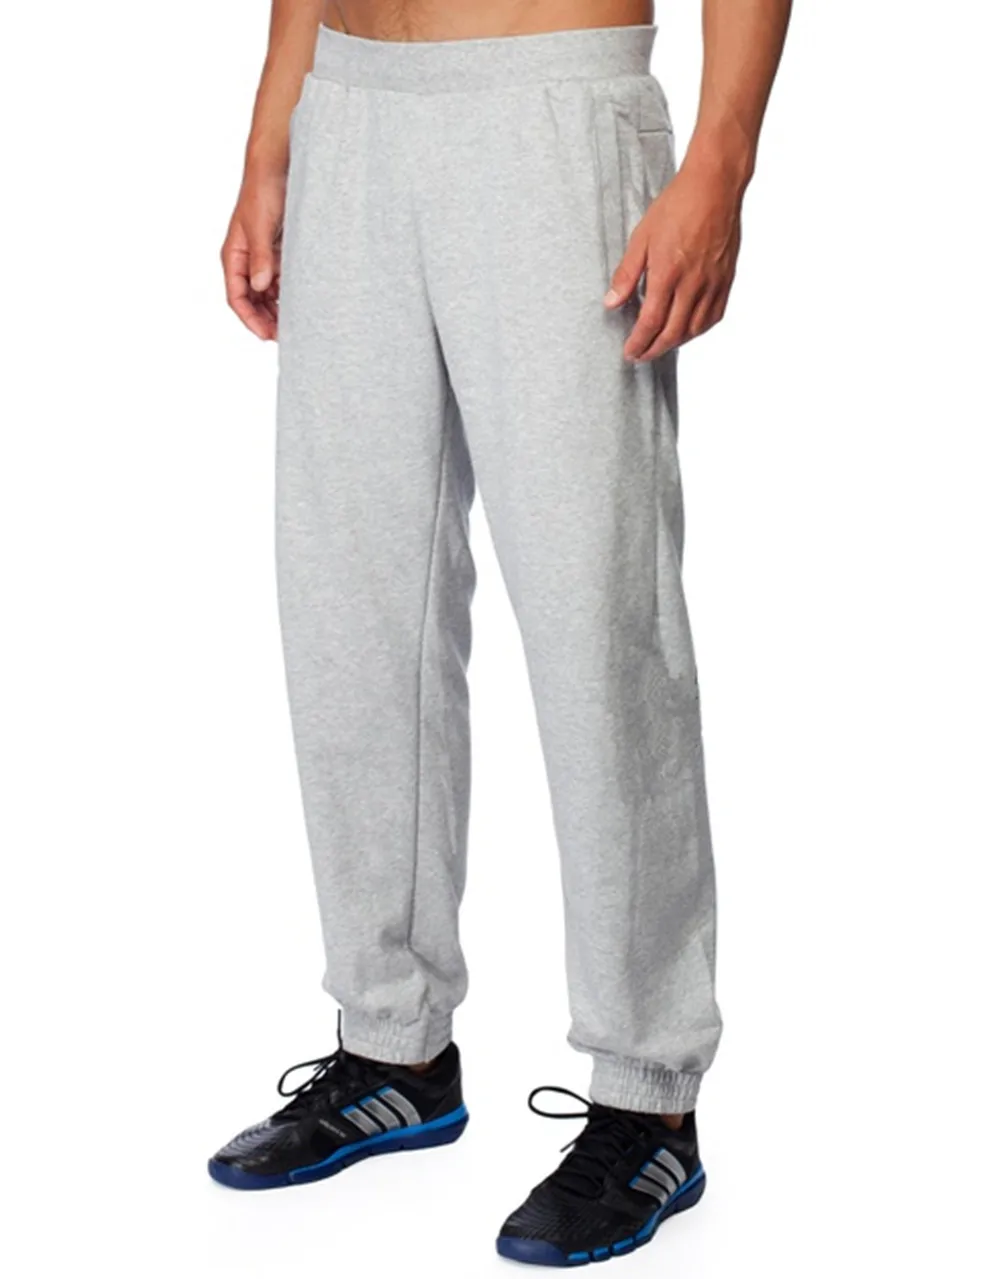 Cotton Blank Sweatpants Sport Clothing For Men Wholesale - Buy ...